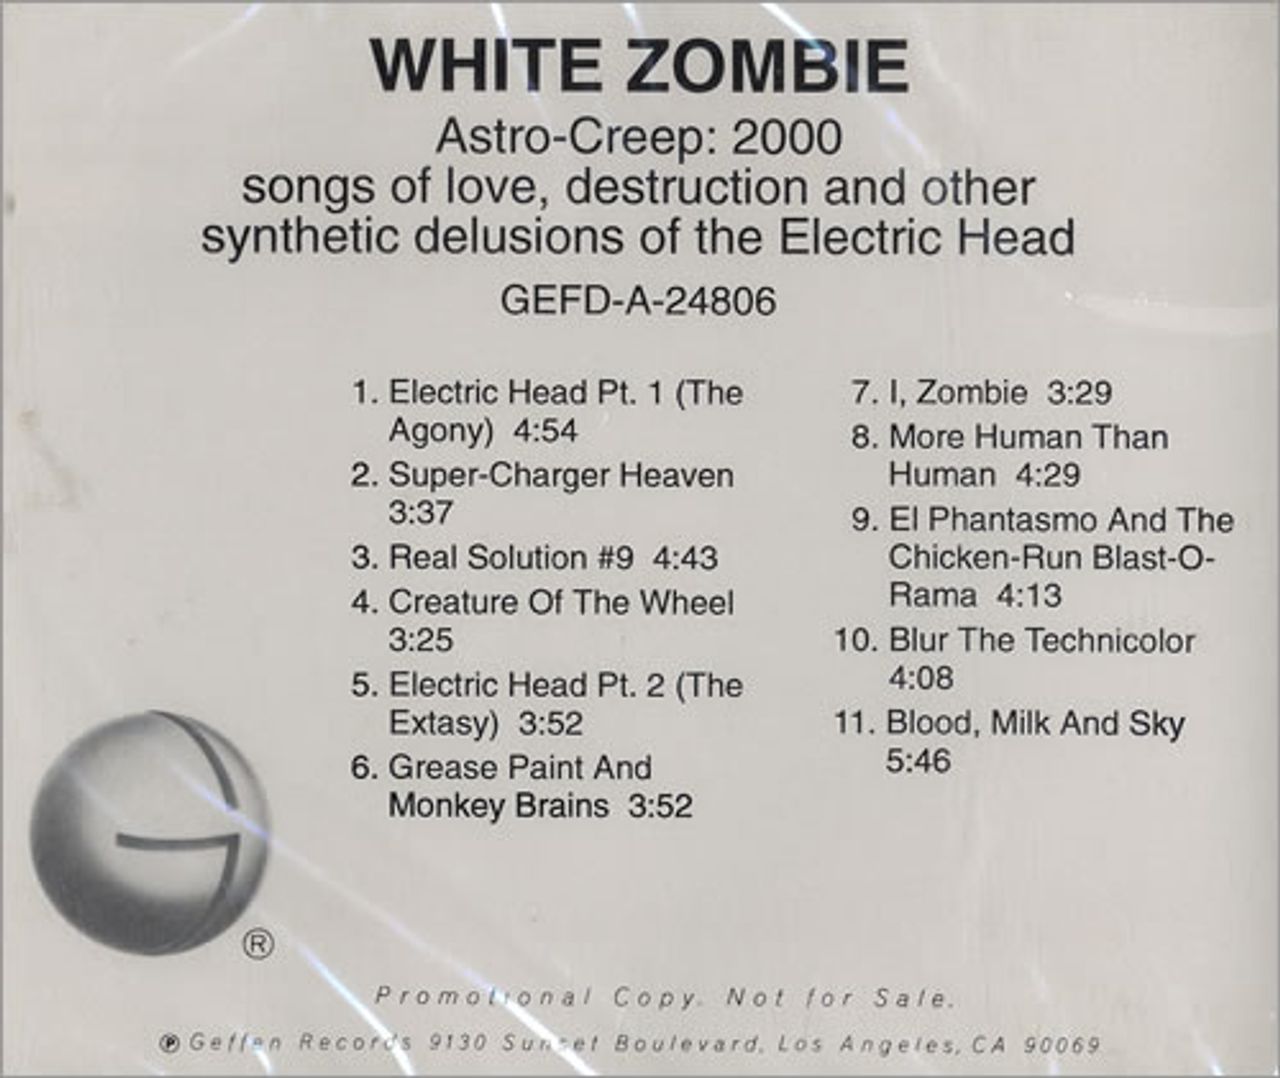 White Zombie Astro-Creep: 2000 US Promo CD album